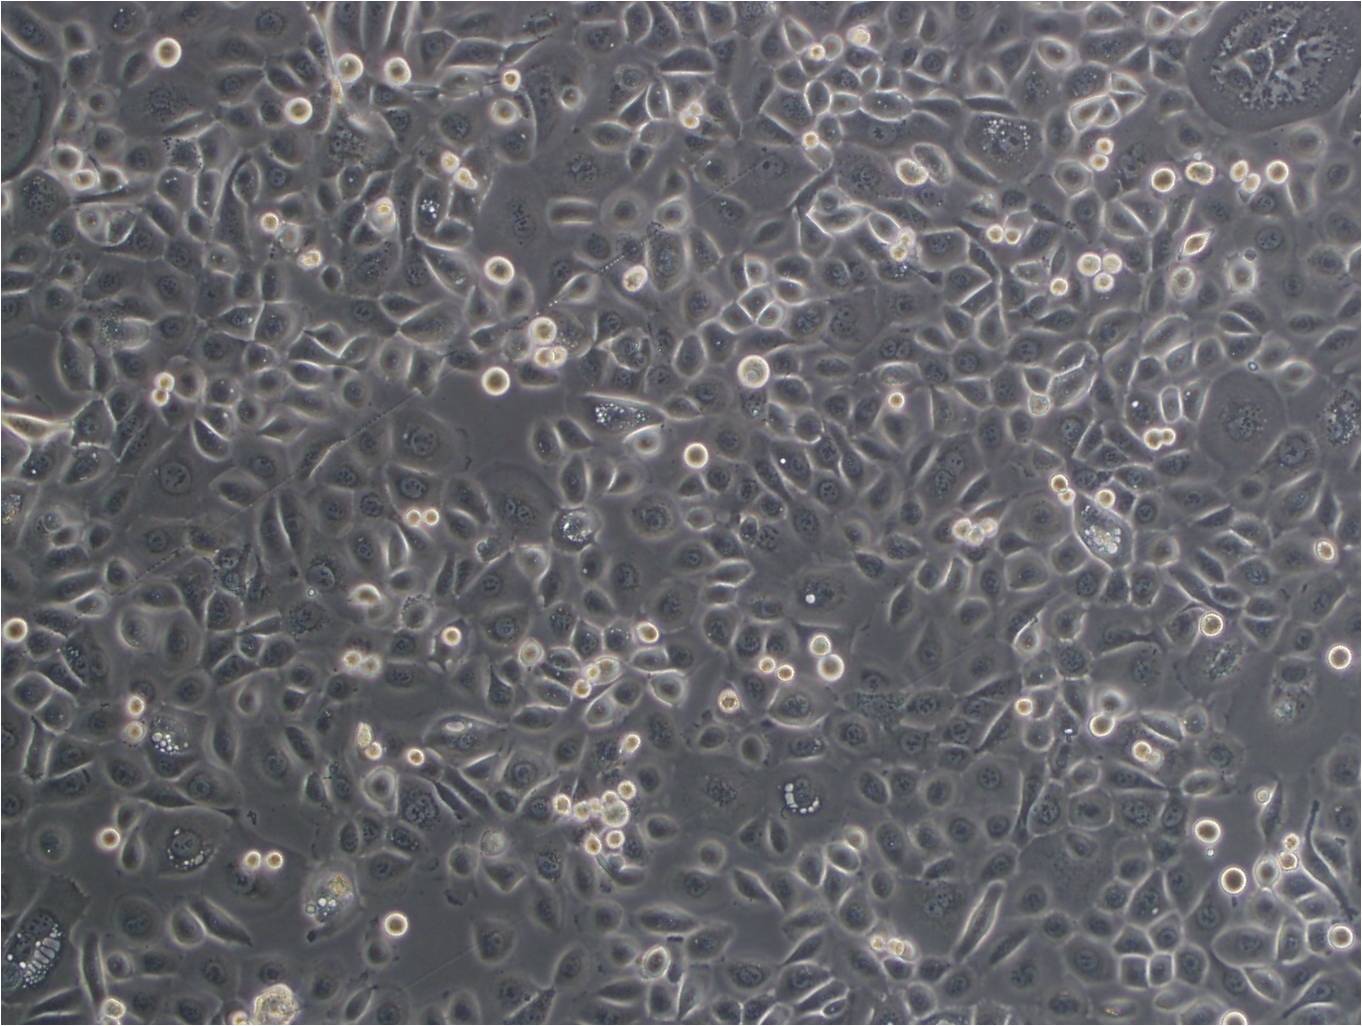 CaES-17 epithelioid cells人食管癌细胞系,CaES-17 epithelioid cells